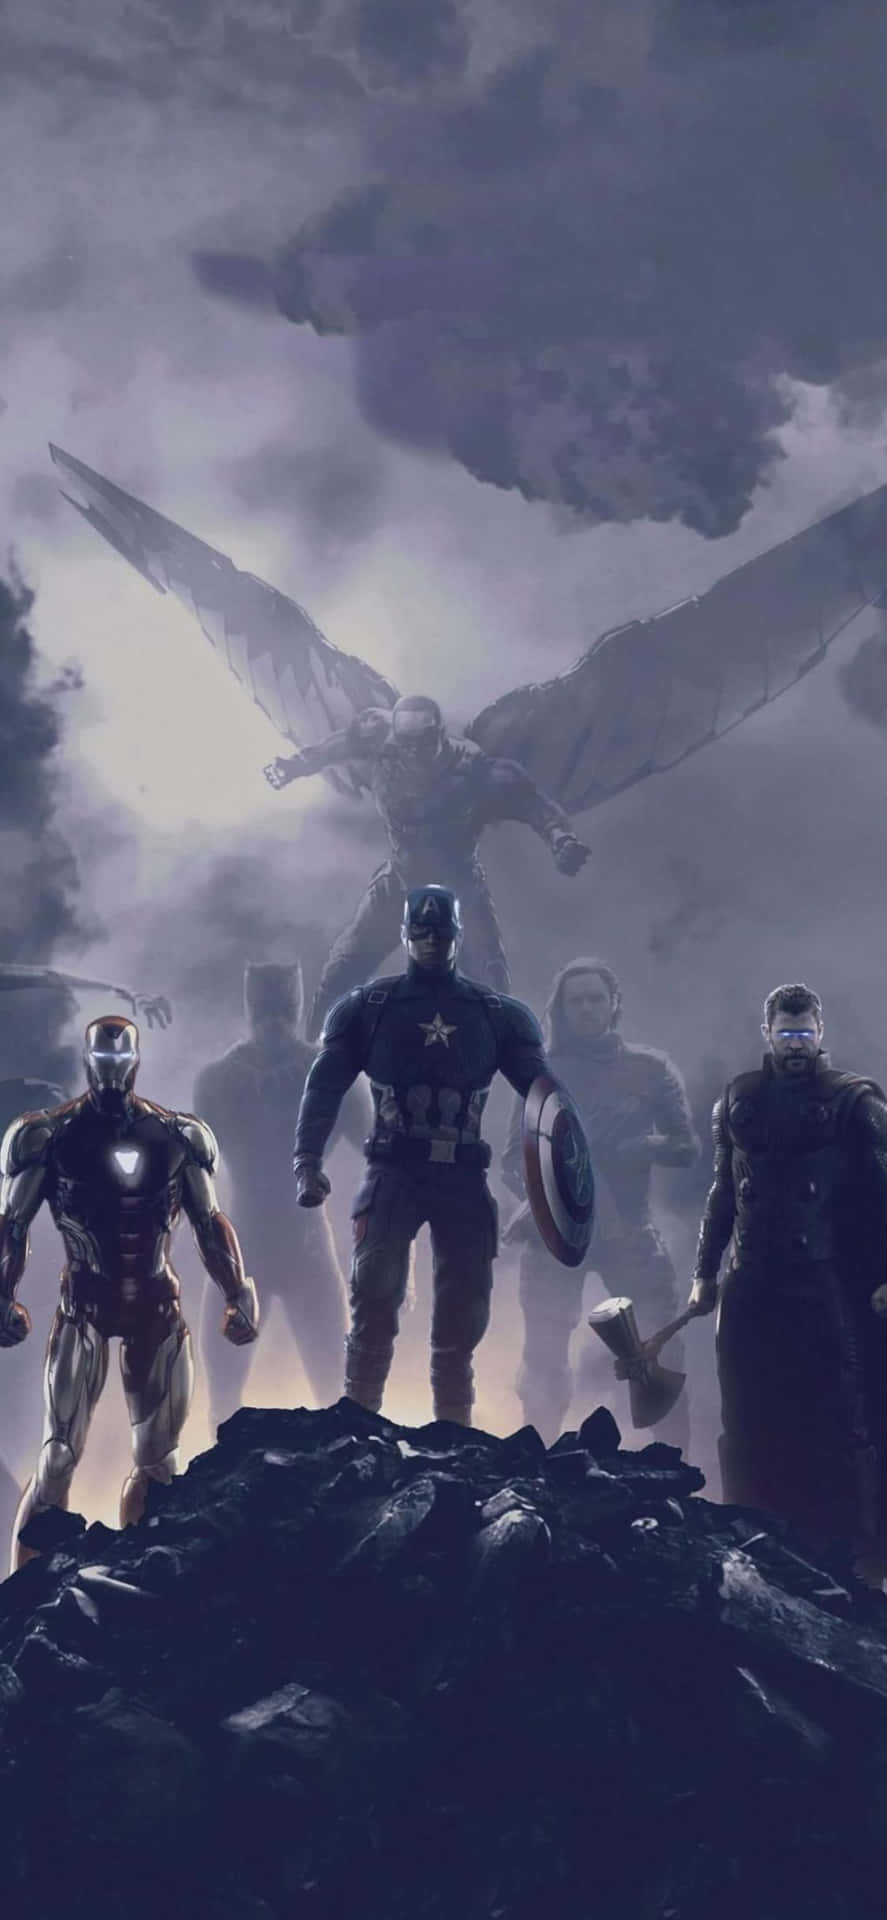 iPhone XS Avengers Endgame baggrundsfilm scene: